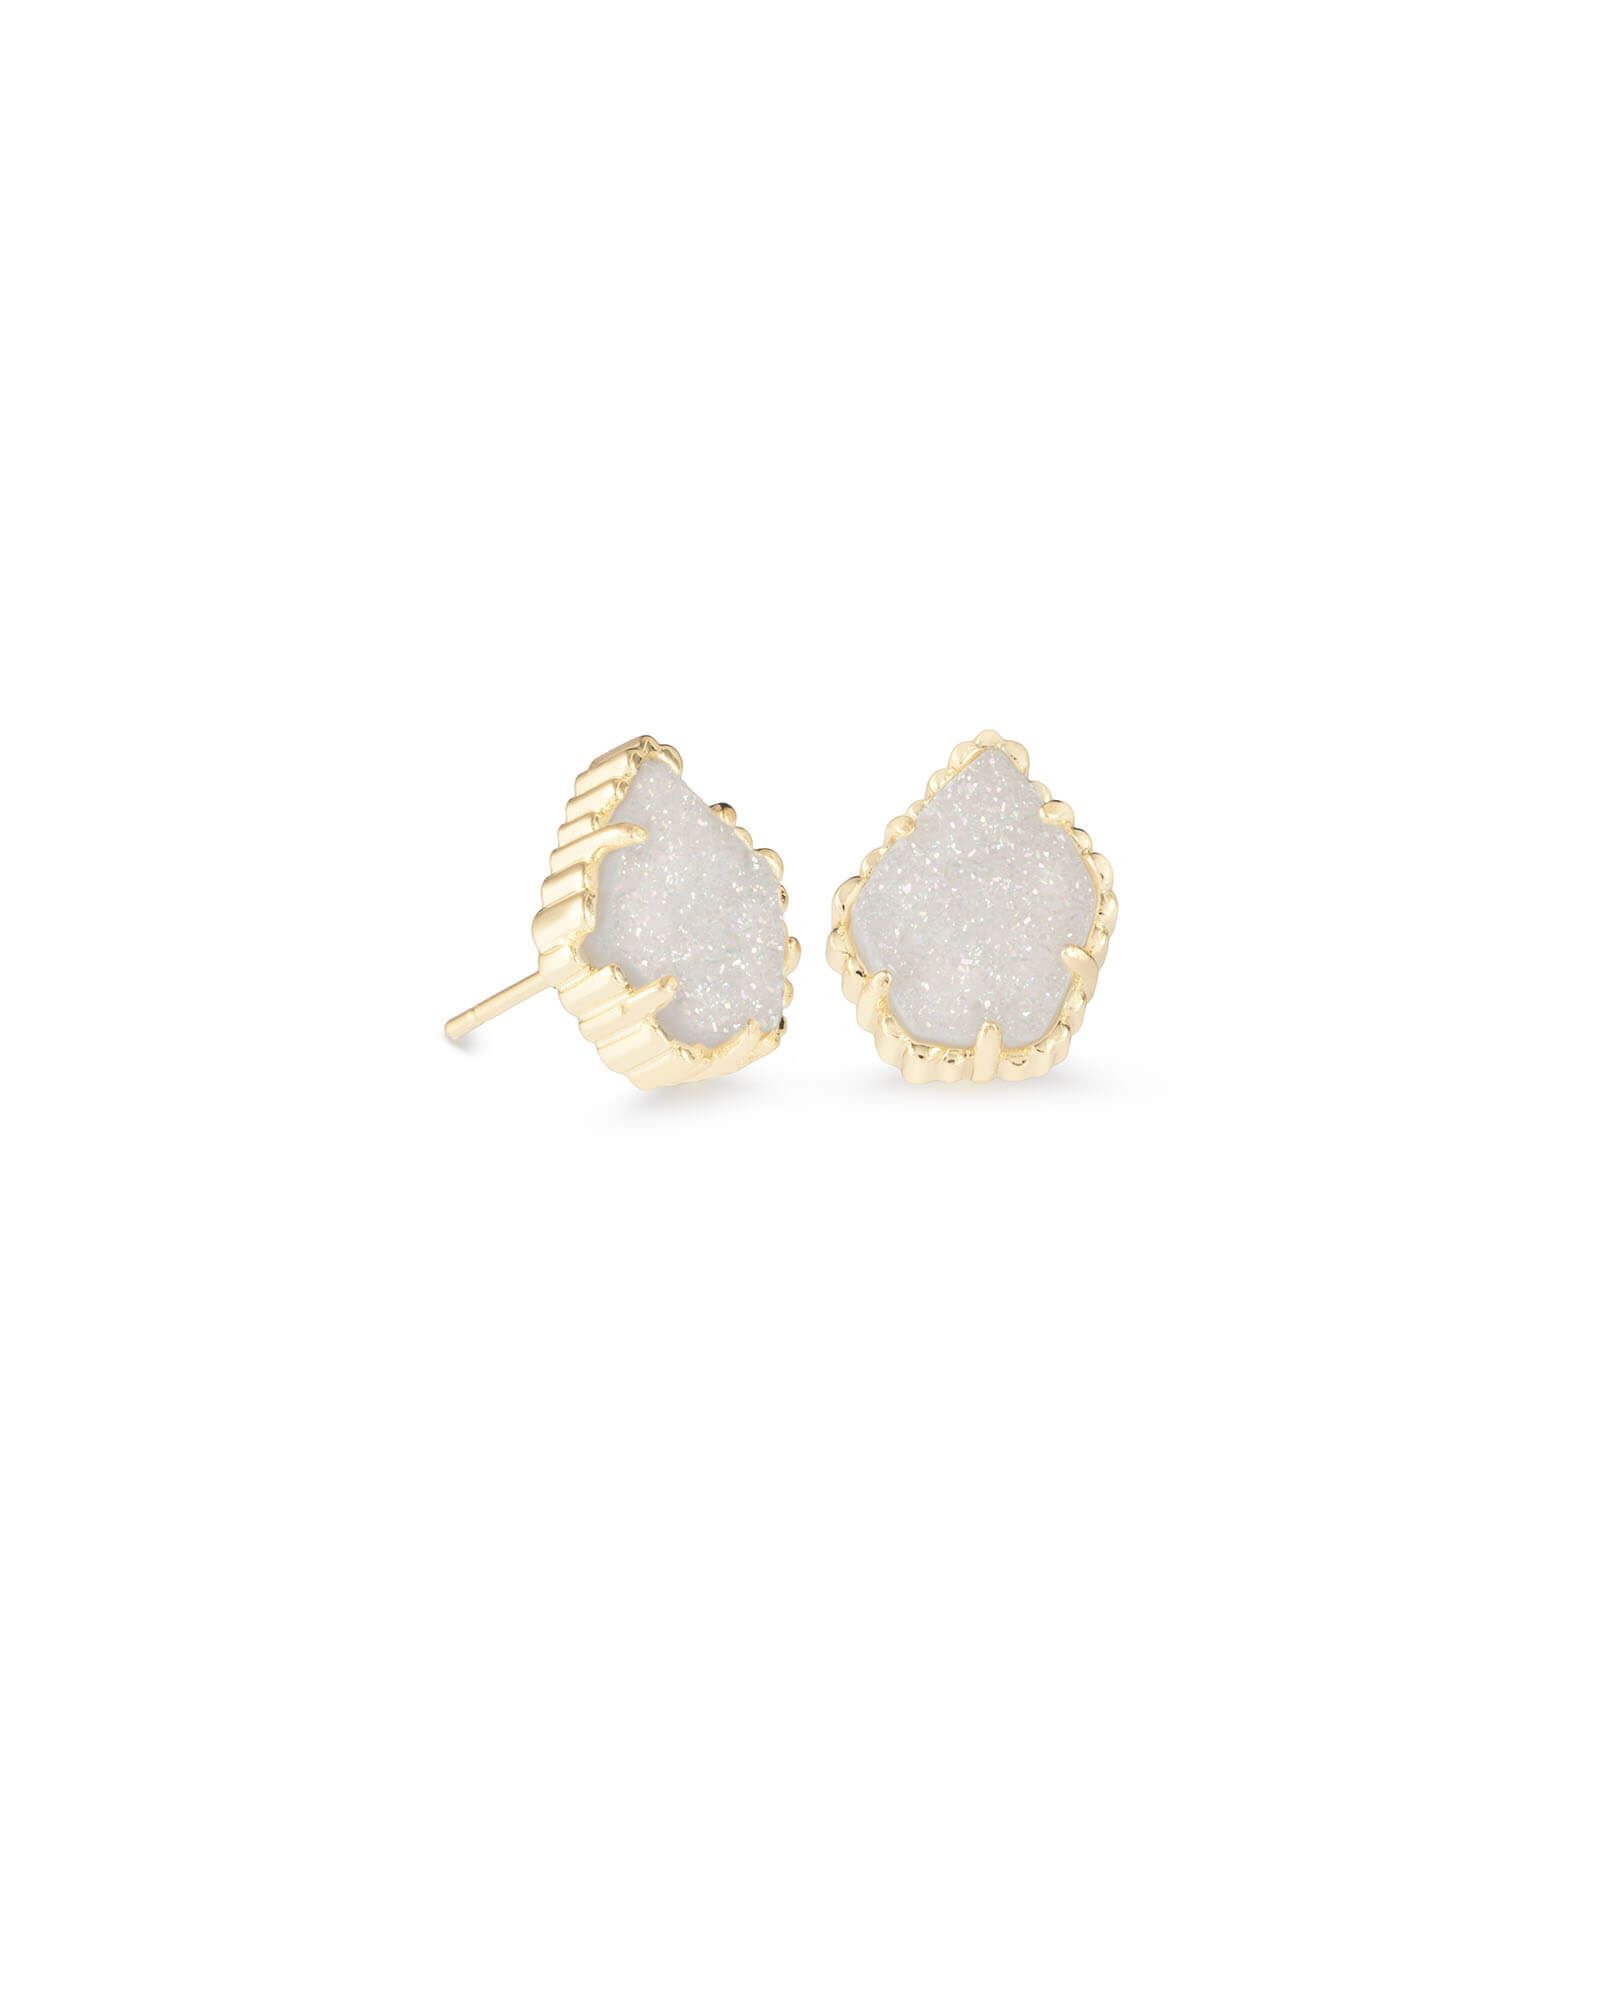 Tessa Gold Stud Earrings in Iridescent Drusy | Kendra Scott | Kendra Scott